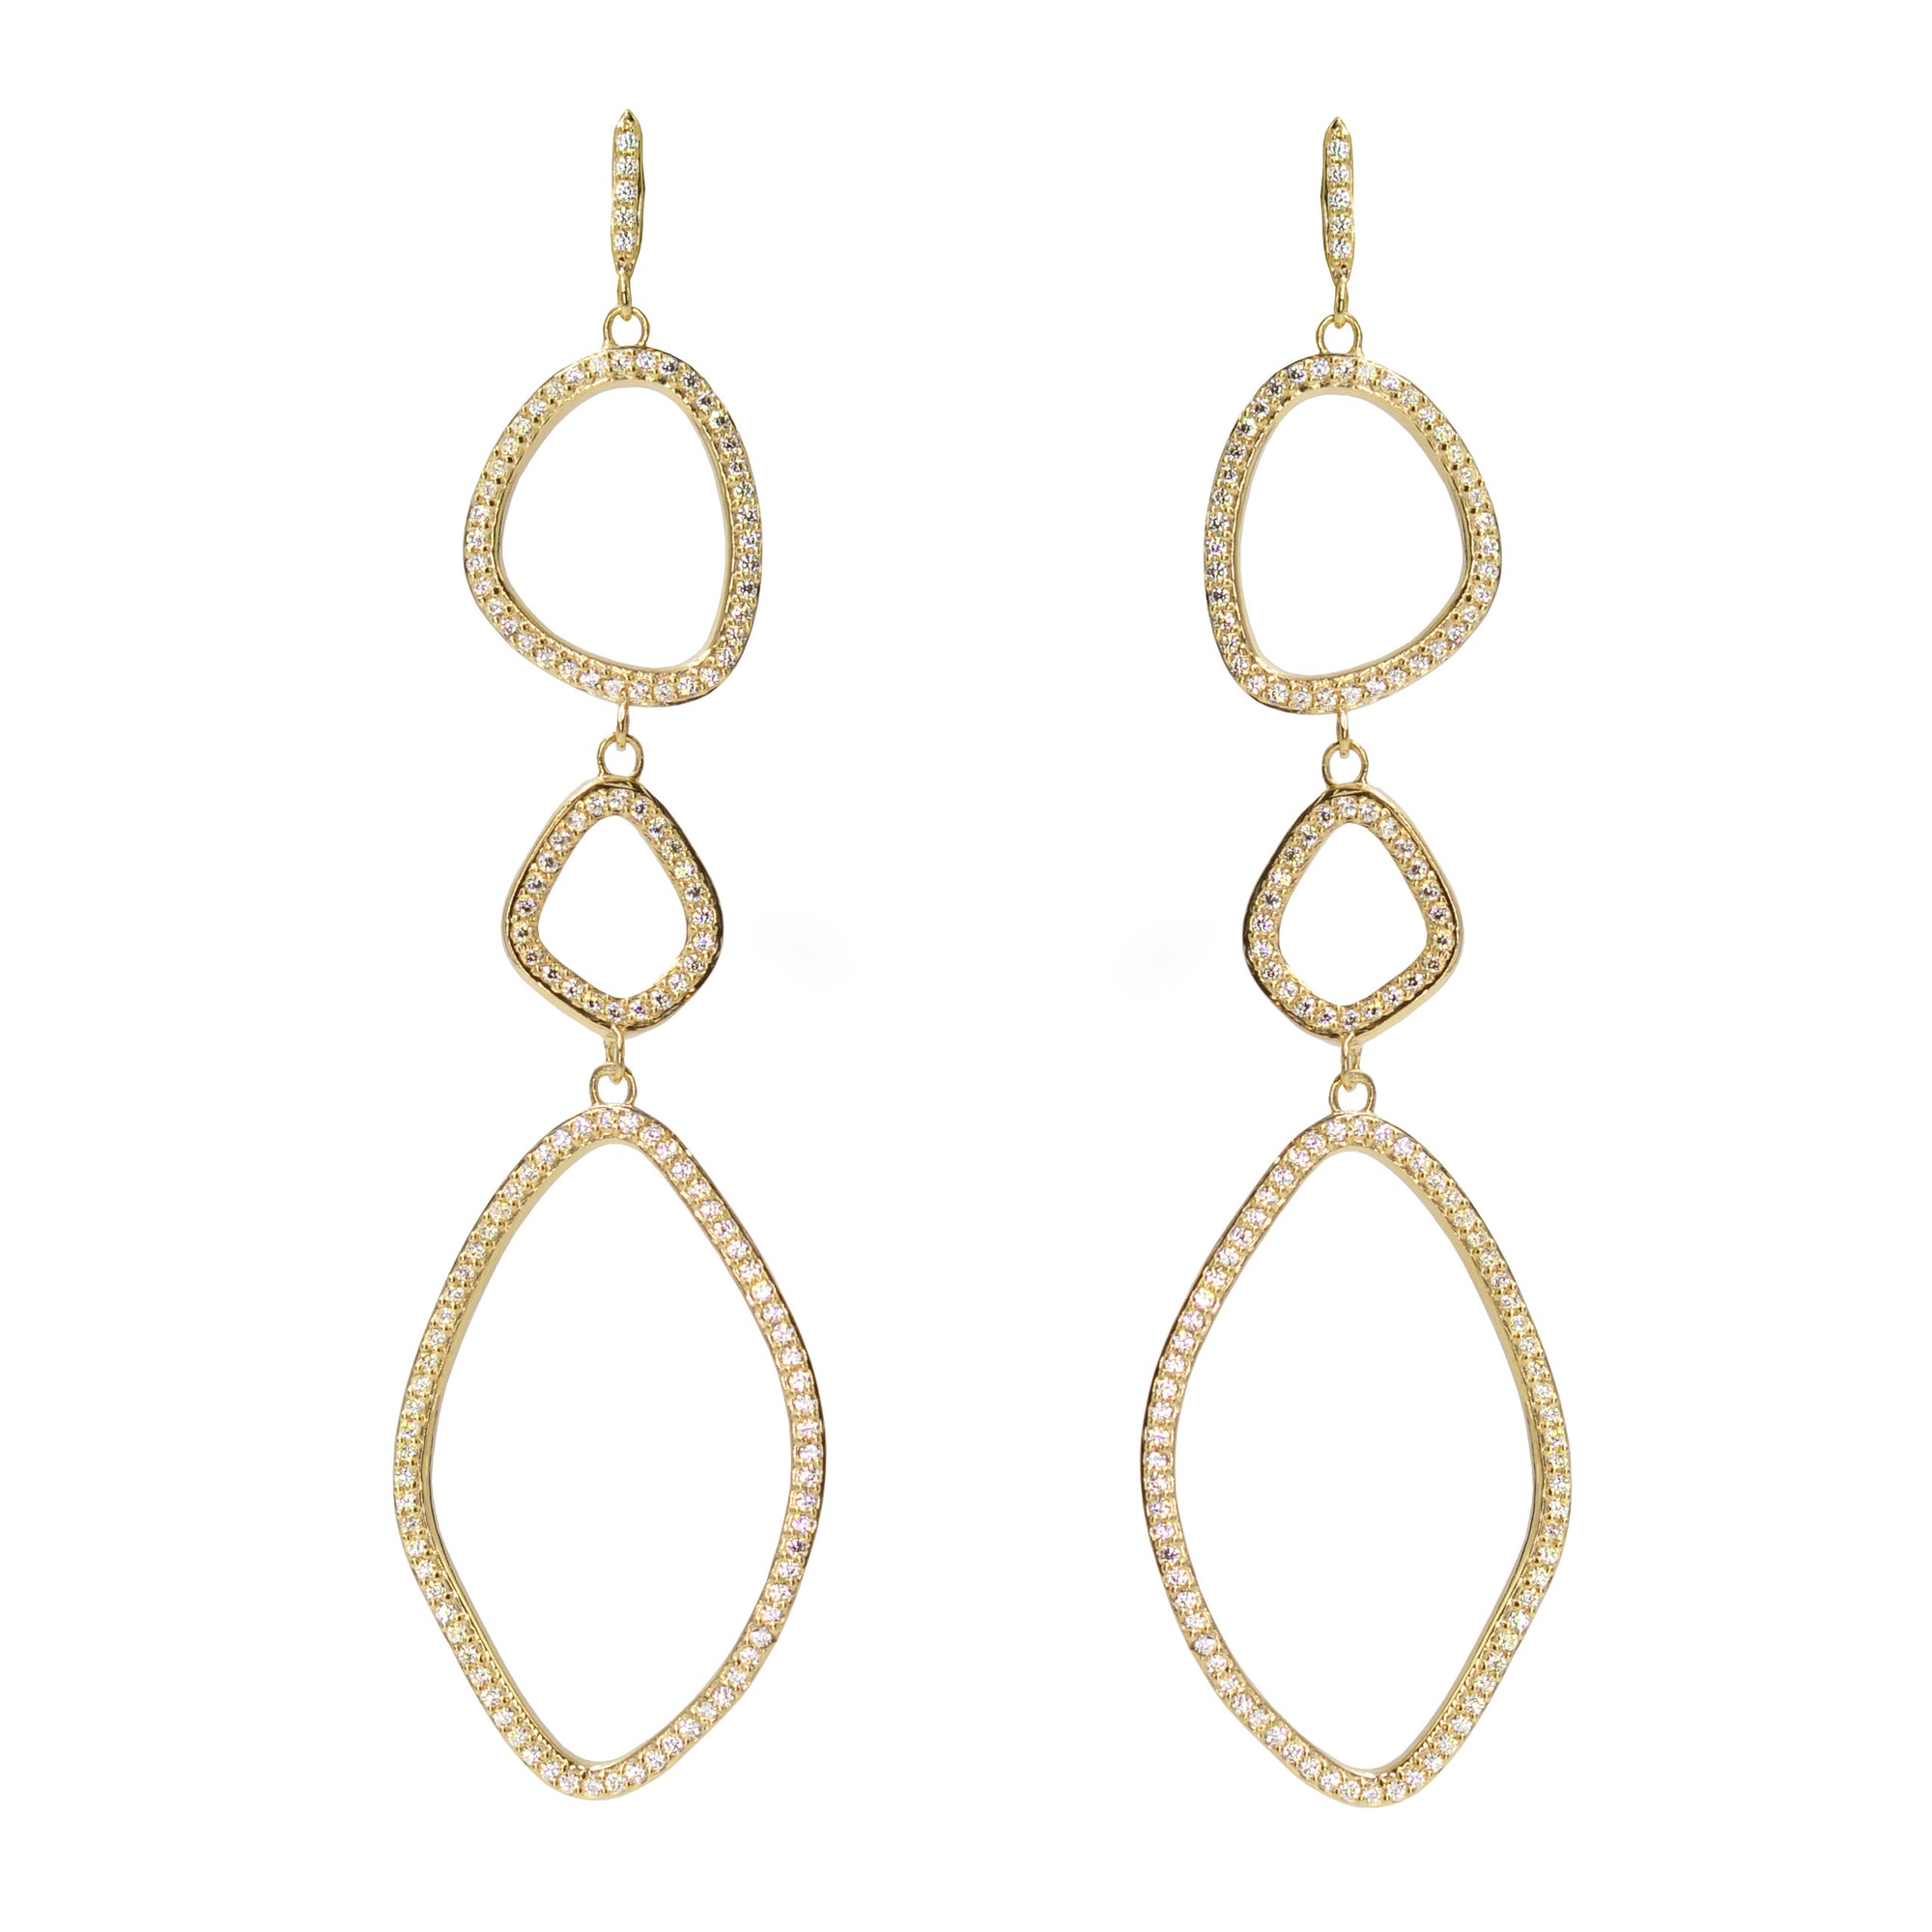 Triple organic shape dangle earrings in yellow gold